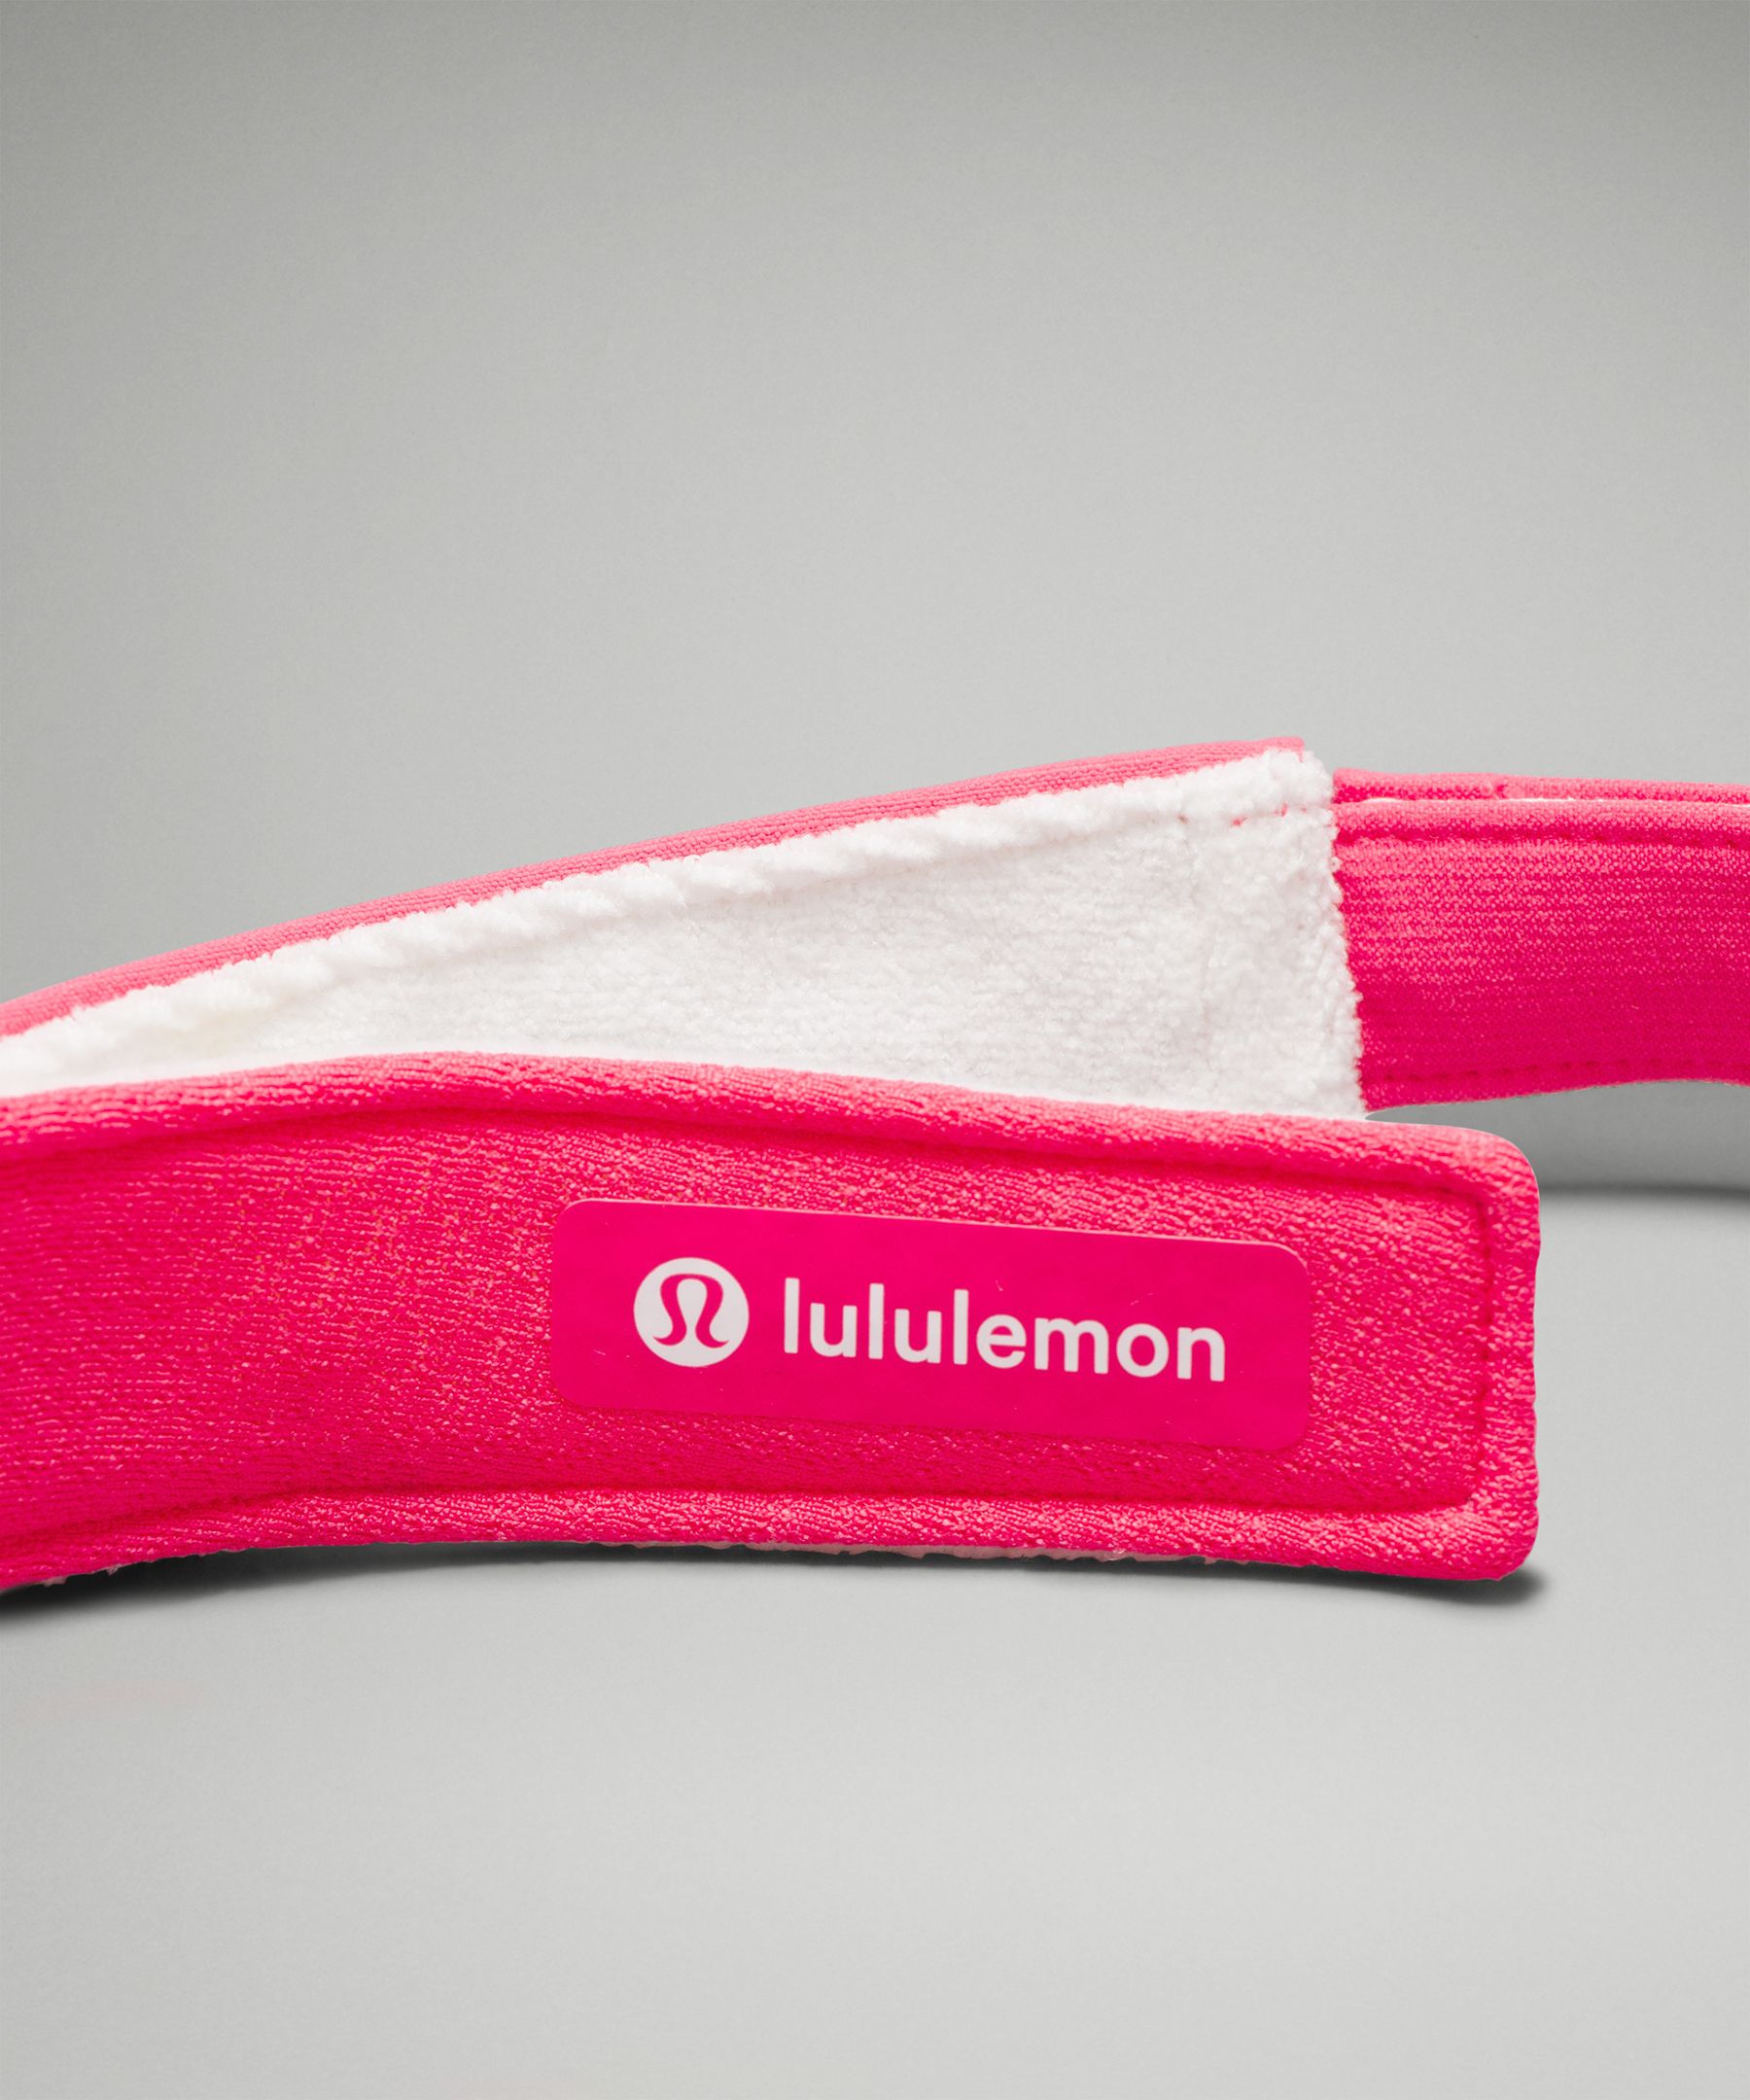 Lululemon Removable Sweatband All-Sport navy blue Visor size L/XL unisex  Size L - $30 (70% Off Retail) - From ShopKate